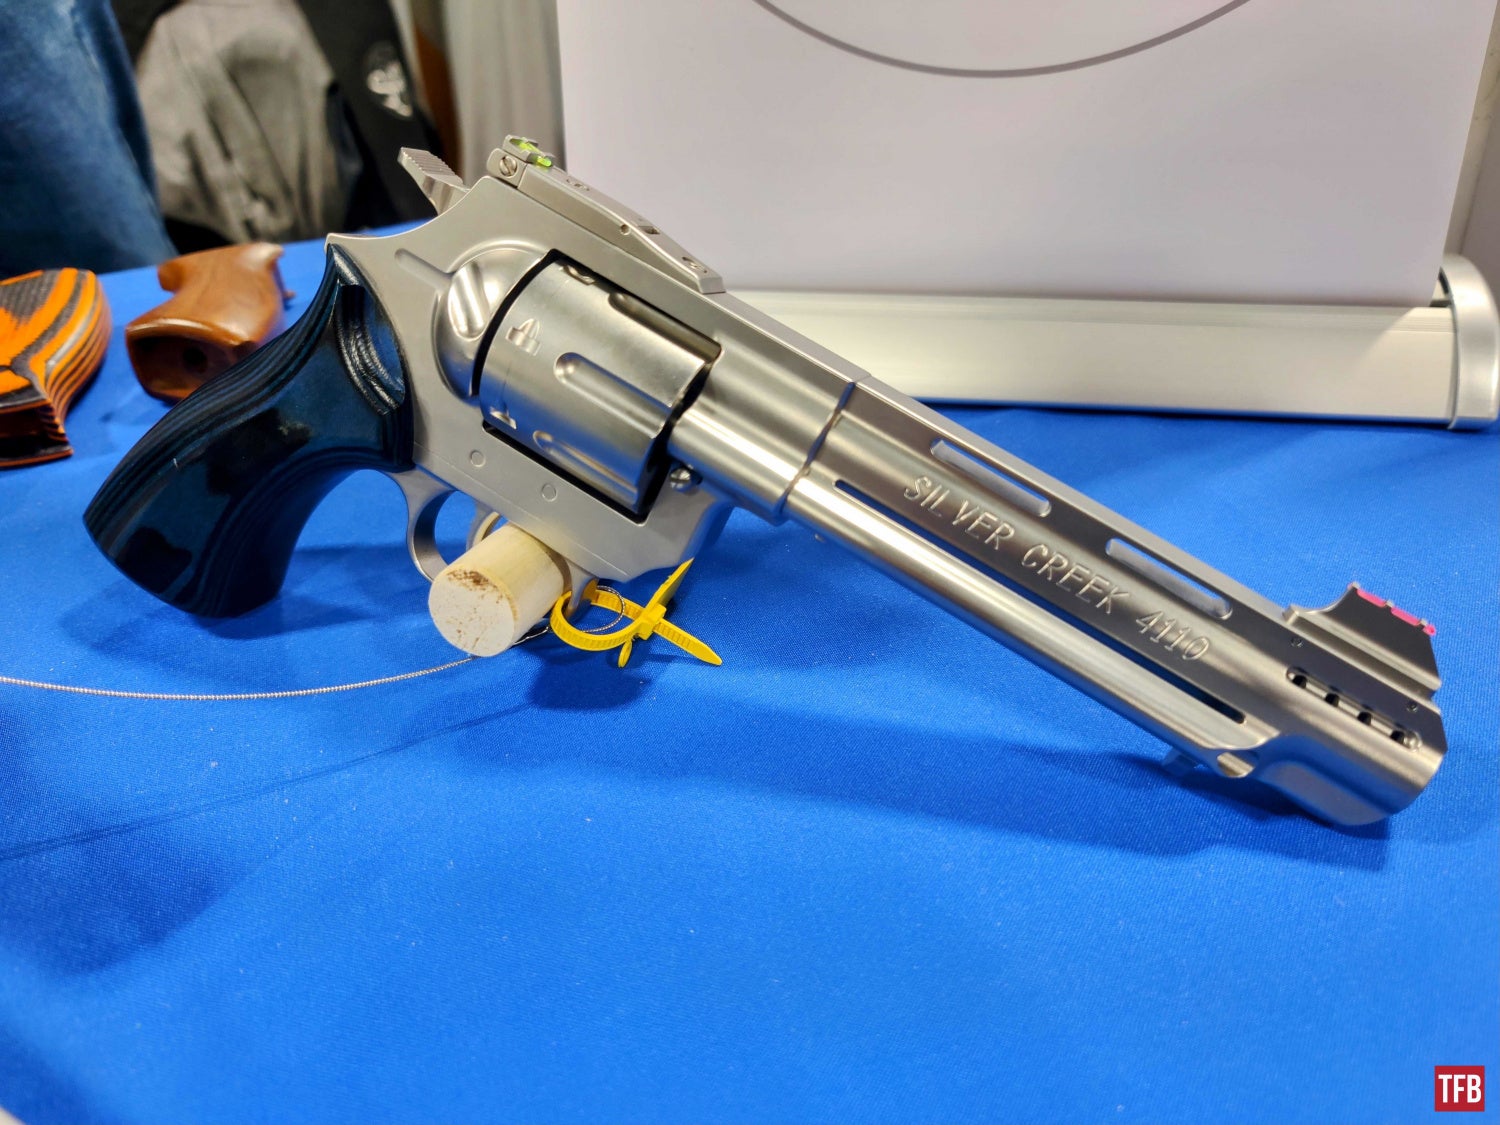 Tfb sc4110 3 | wheelgun wednesday: shot 2023 revolver roundup | 2nd amendment